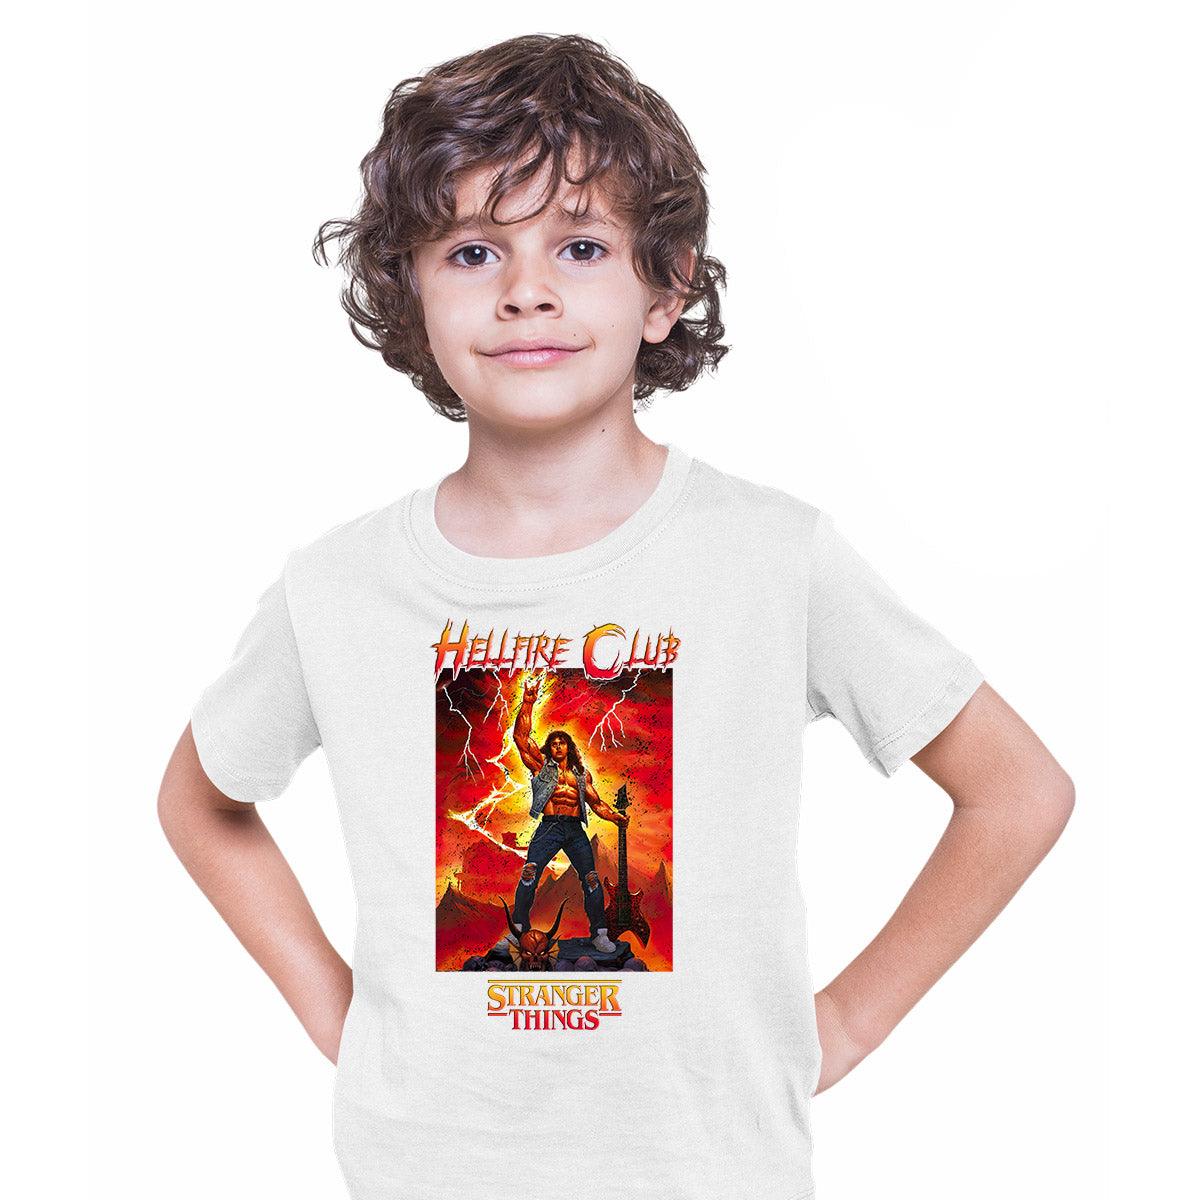 Artifact øve sig Skole lærer Eddie Munson Hellfire Club Guitar Power Stranger Things 4 Kids T-shirt